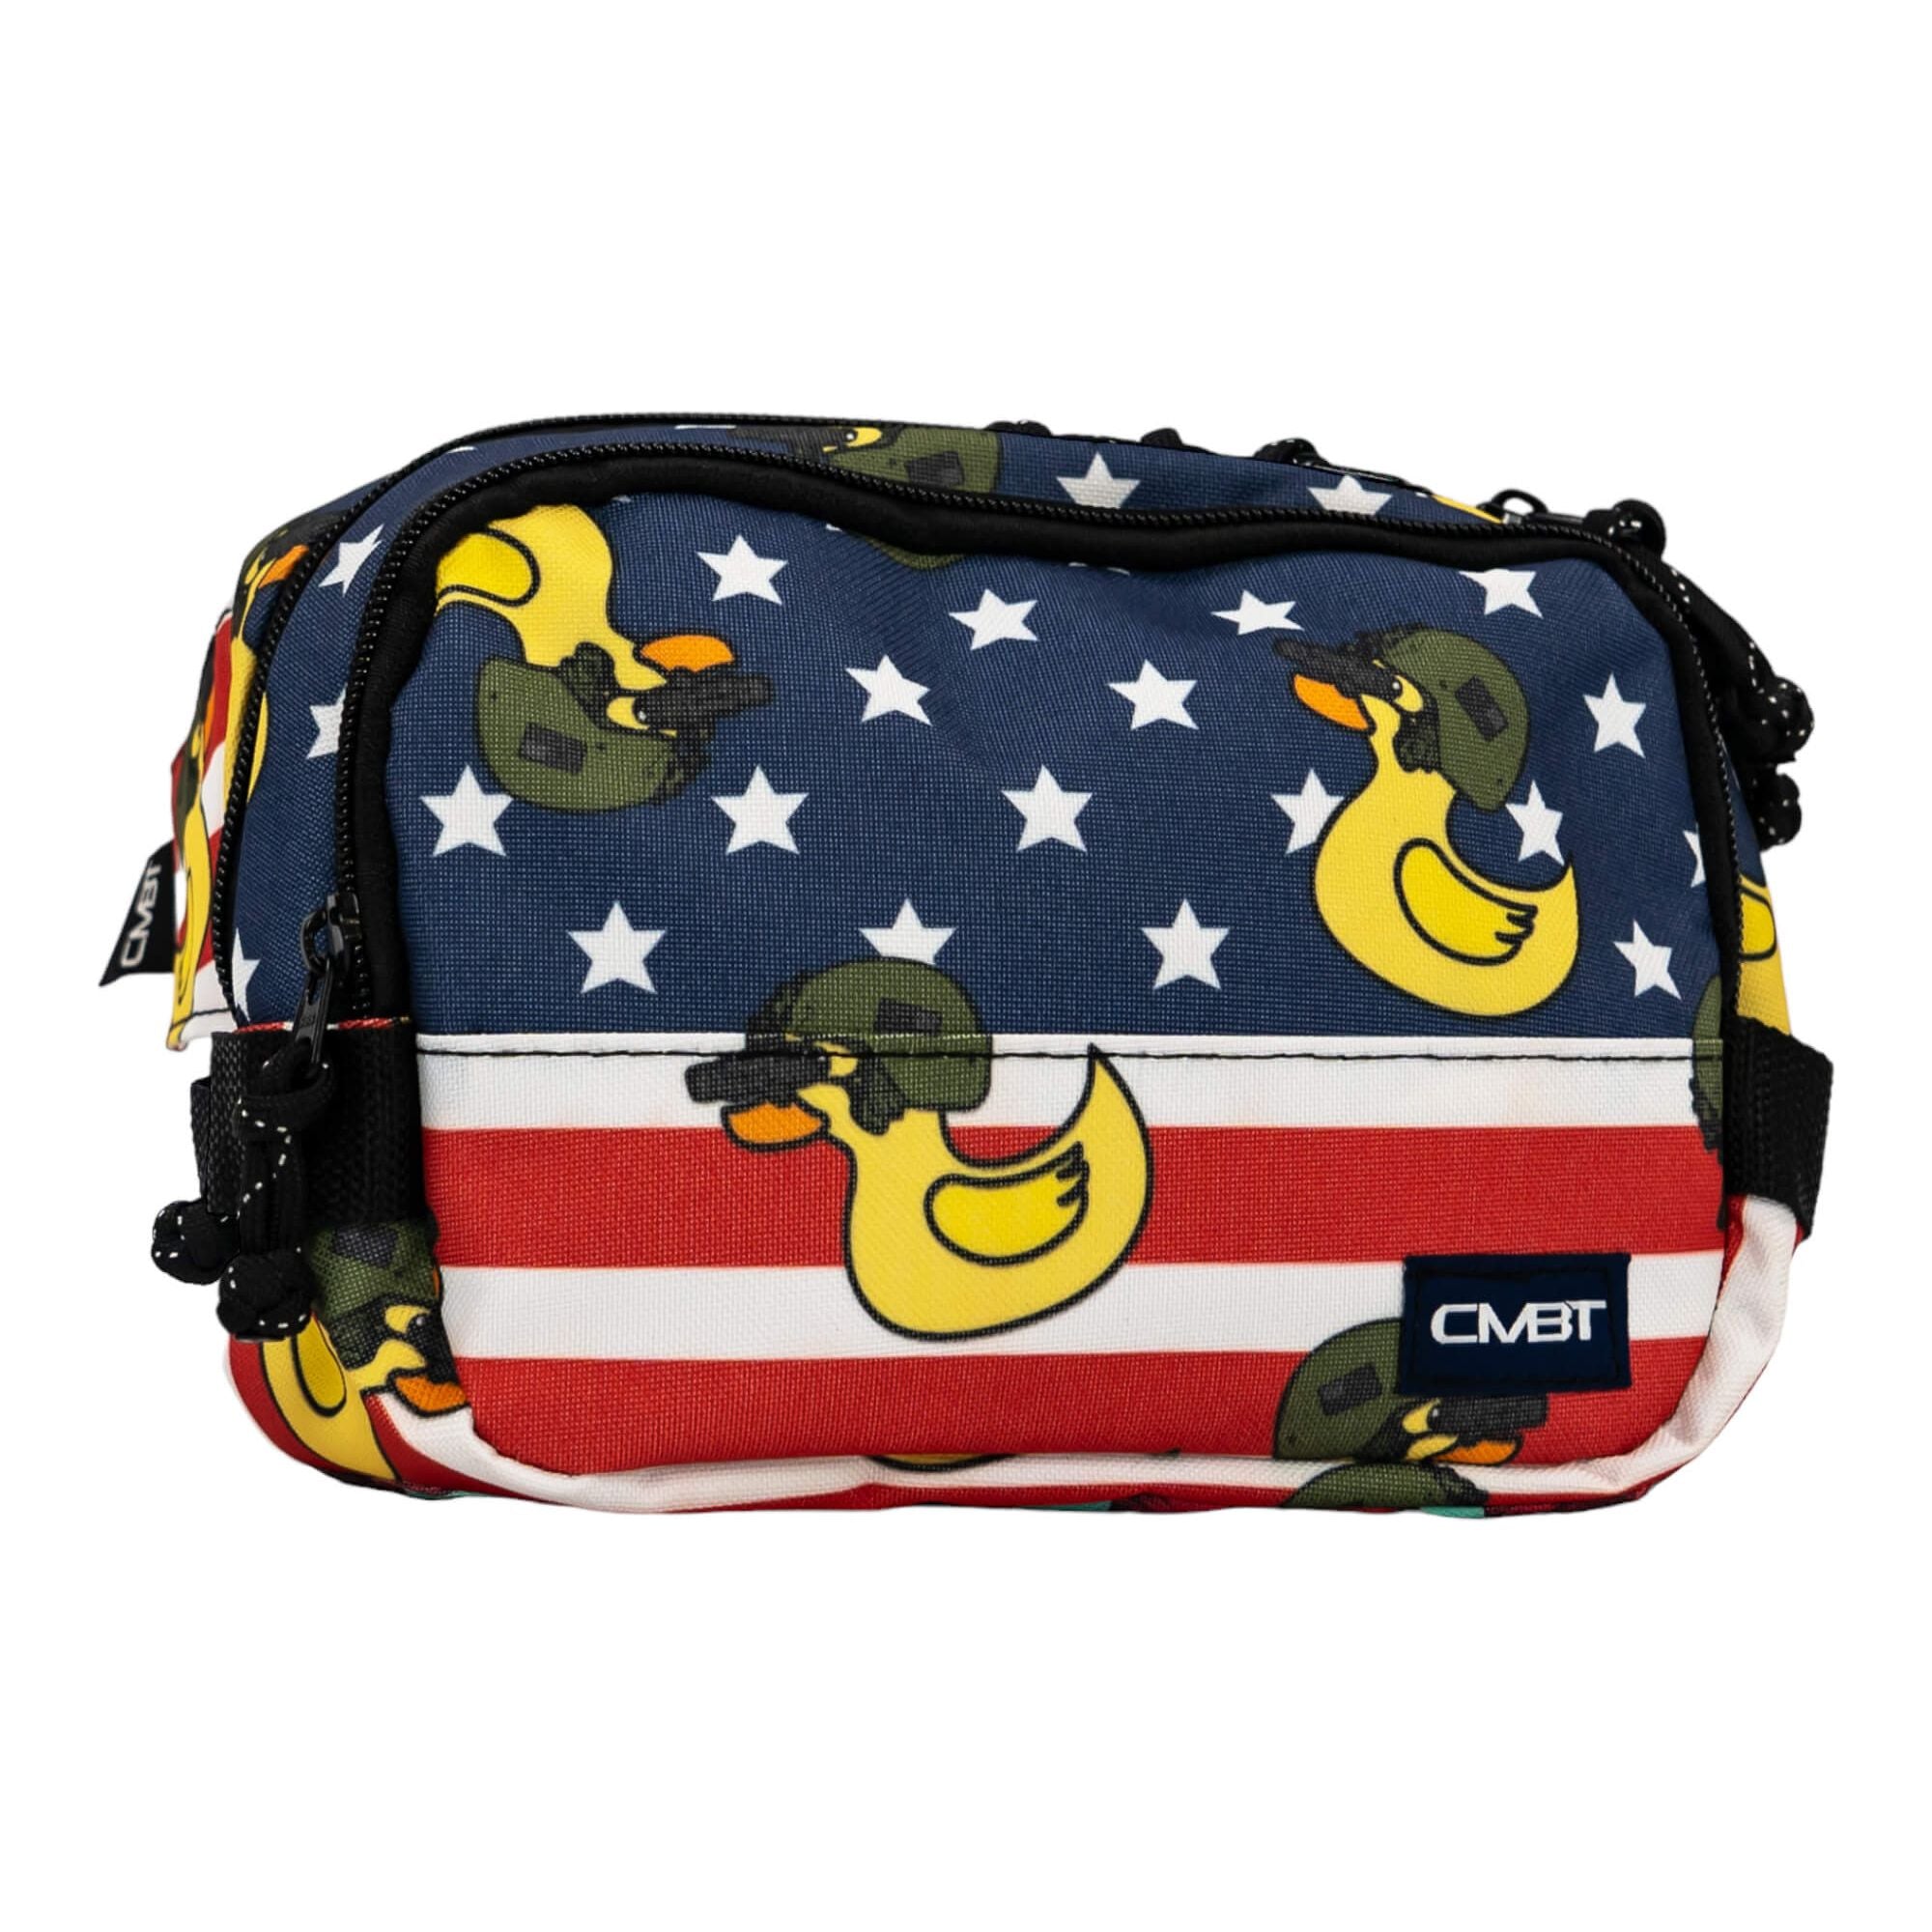 Heavy-Duty Elite Security Bag - U.S. Bank Supply ®